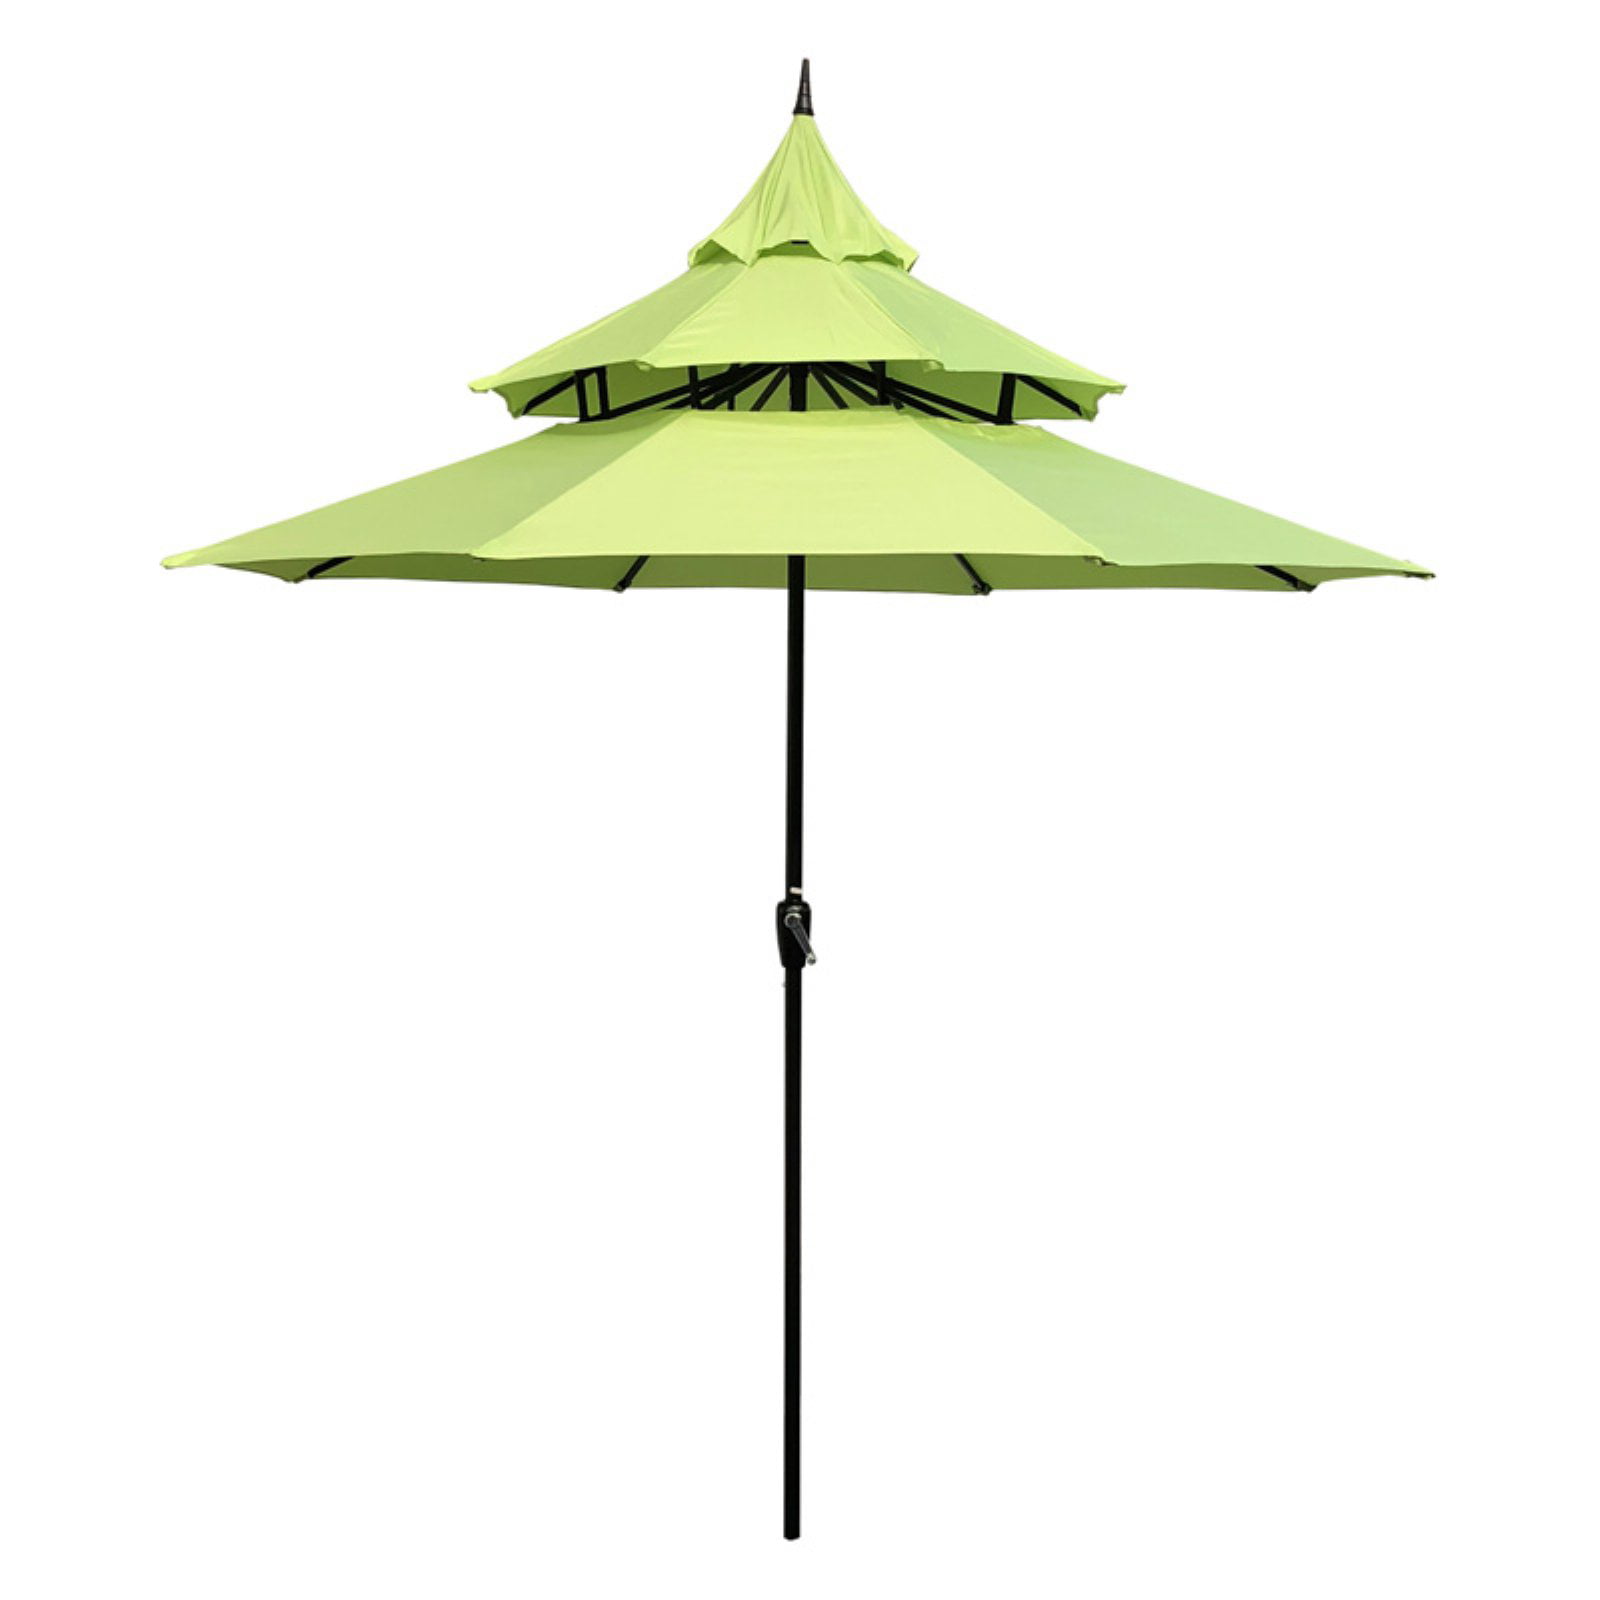 Abble 9 Ft Steel Pagoda Patio Umbrella